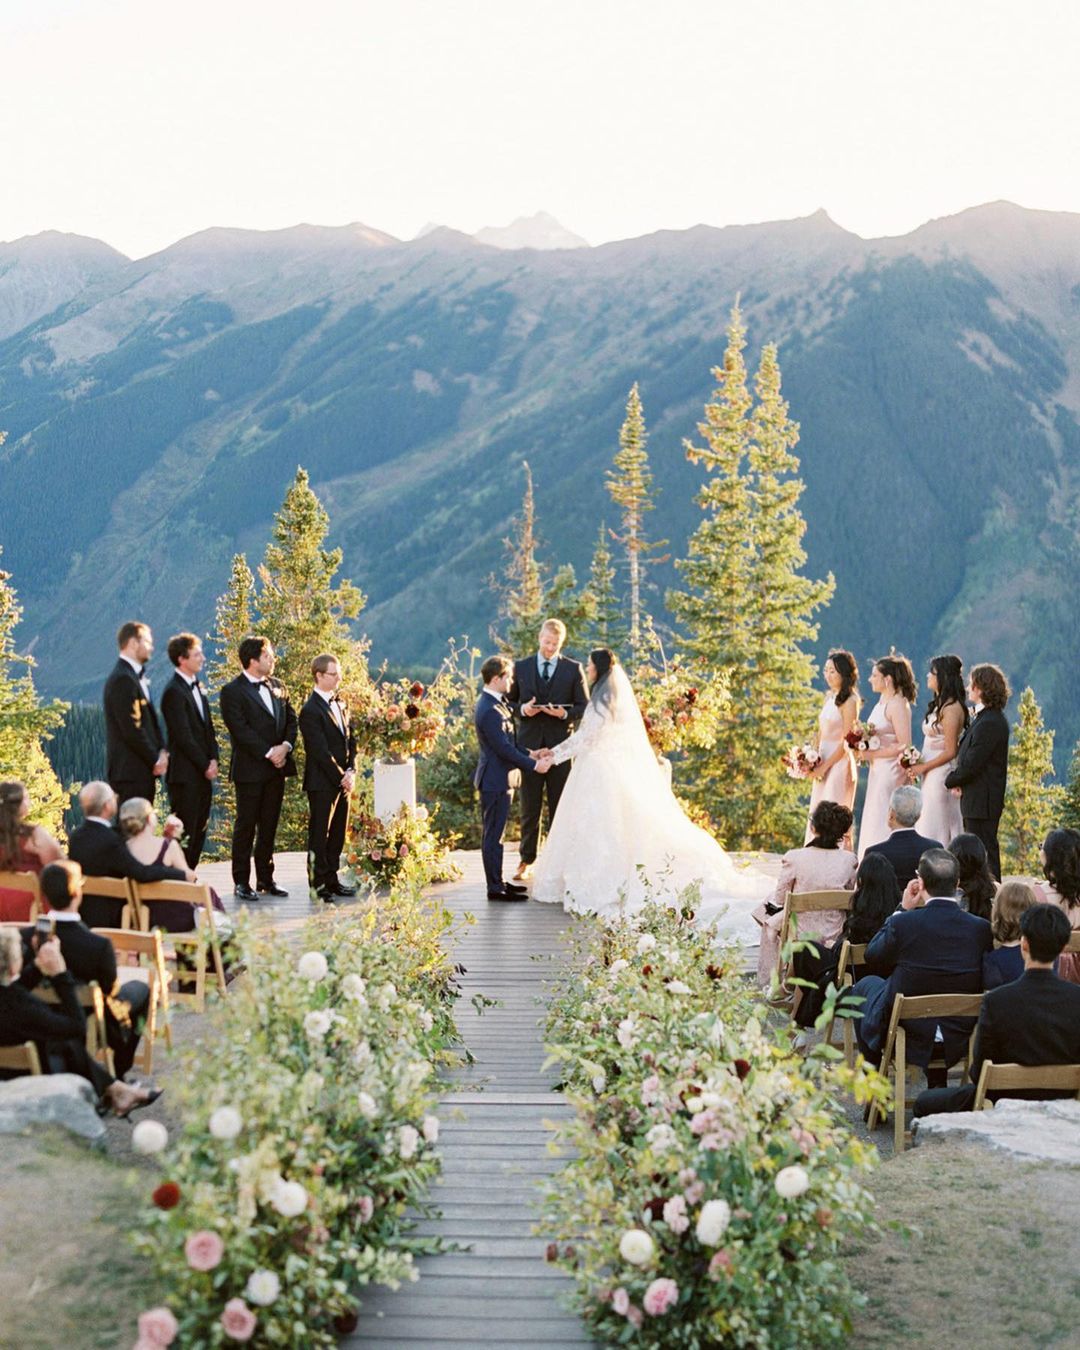 Romantic wedding venues in the US